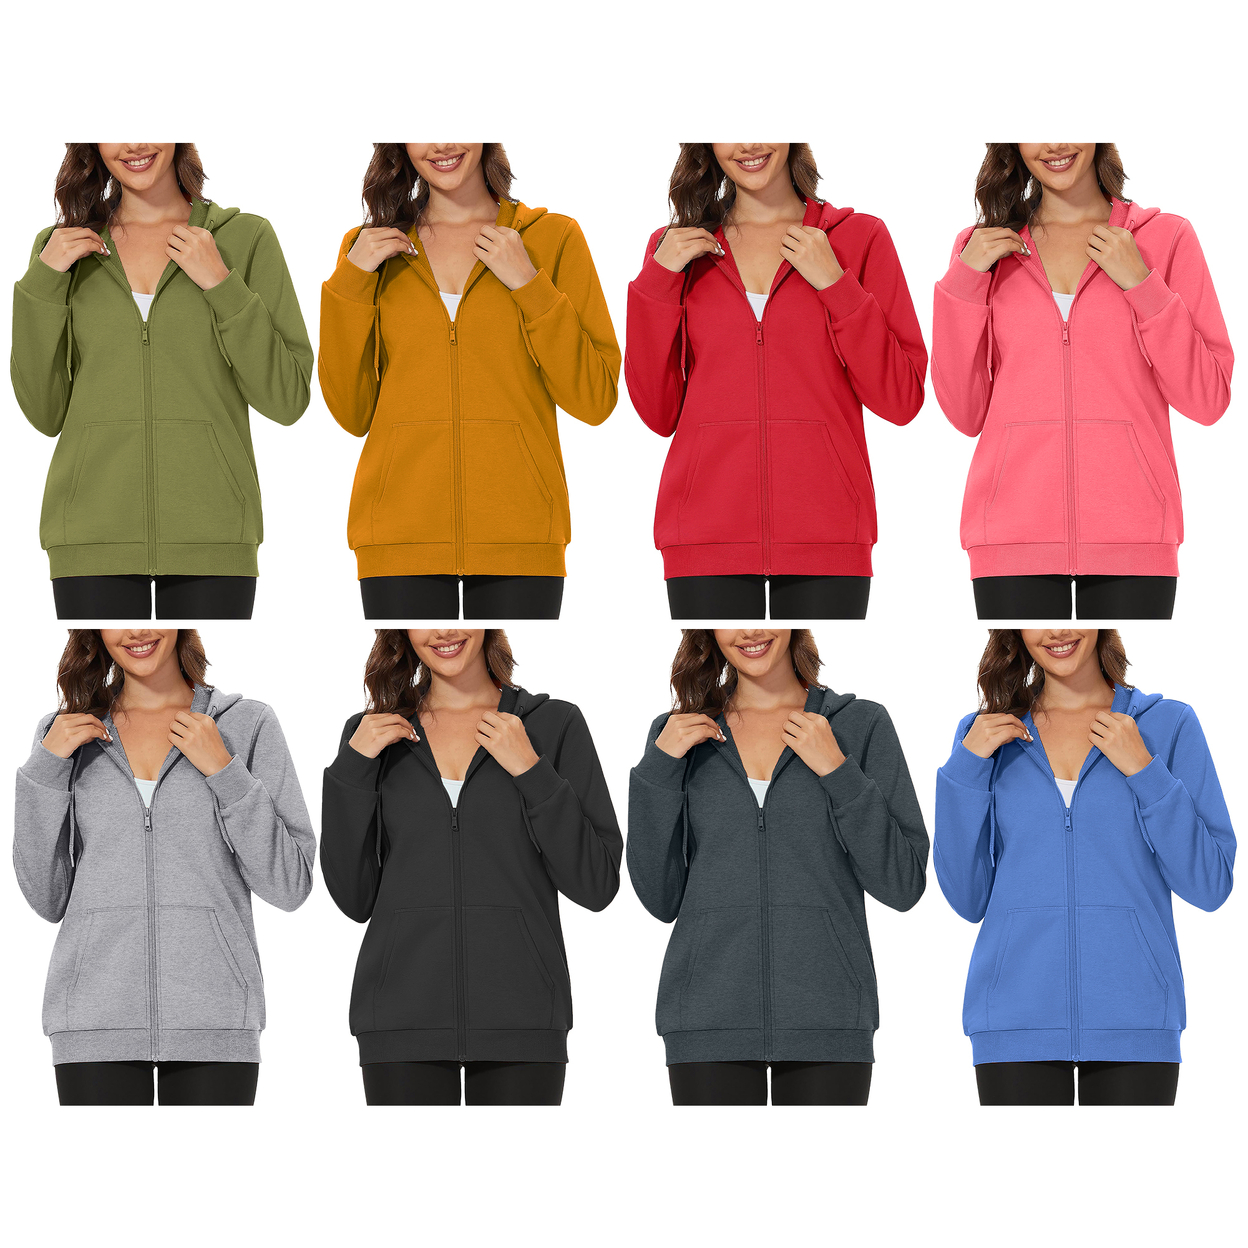 2-Pack: Women's Winter Warm Soft Blend Fleece Lined Full Zip Up Hoodies - X-large